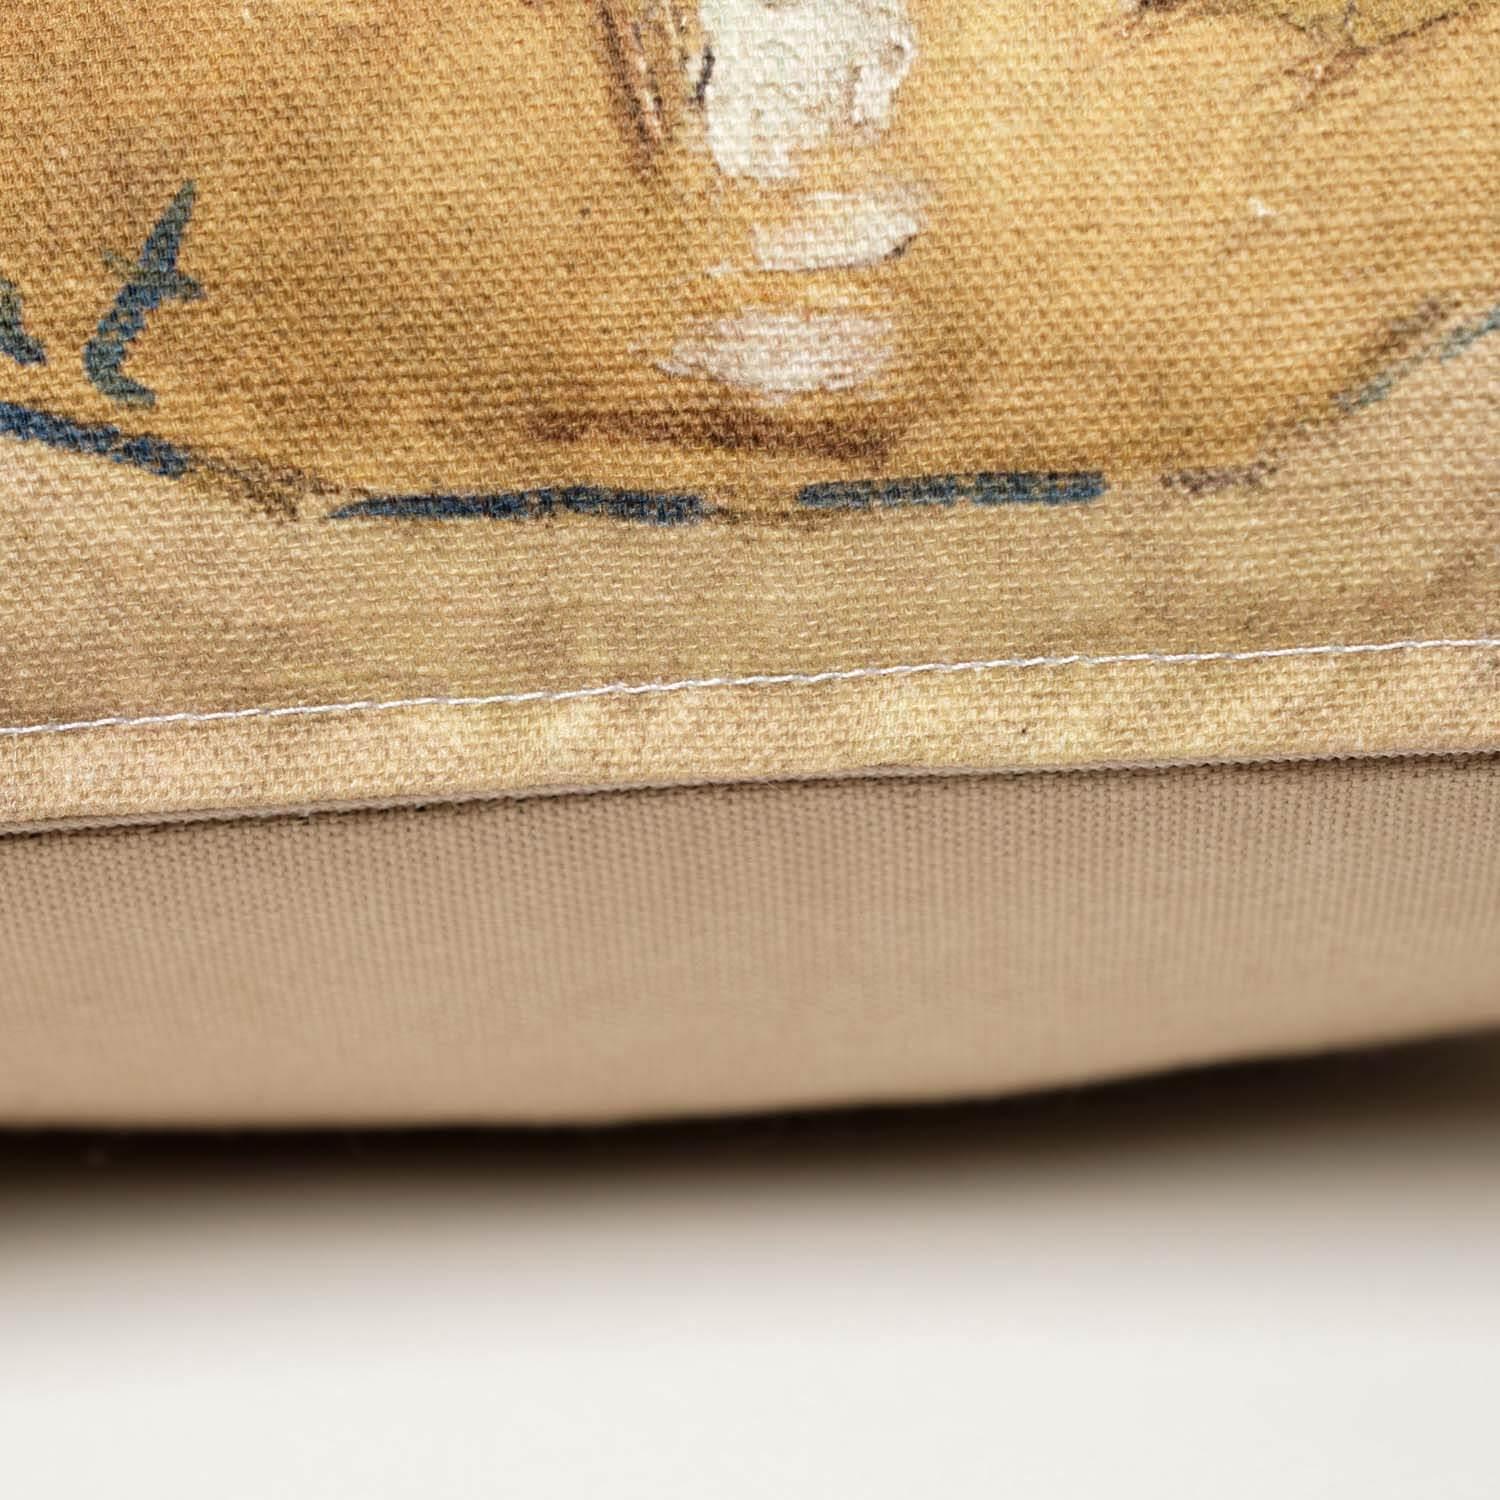 Madonna of the Pinks - Raphael’s - National Gallery Cushion - Handmade Cushions UK - WeLoveCushions